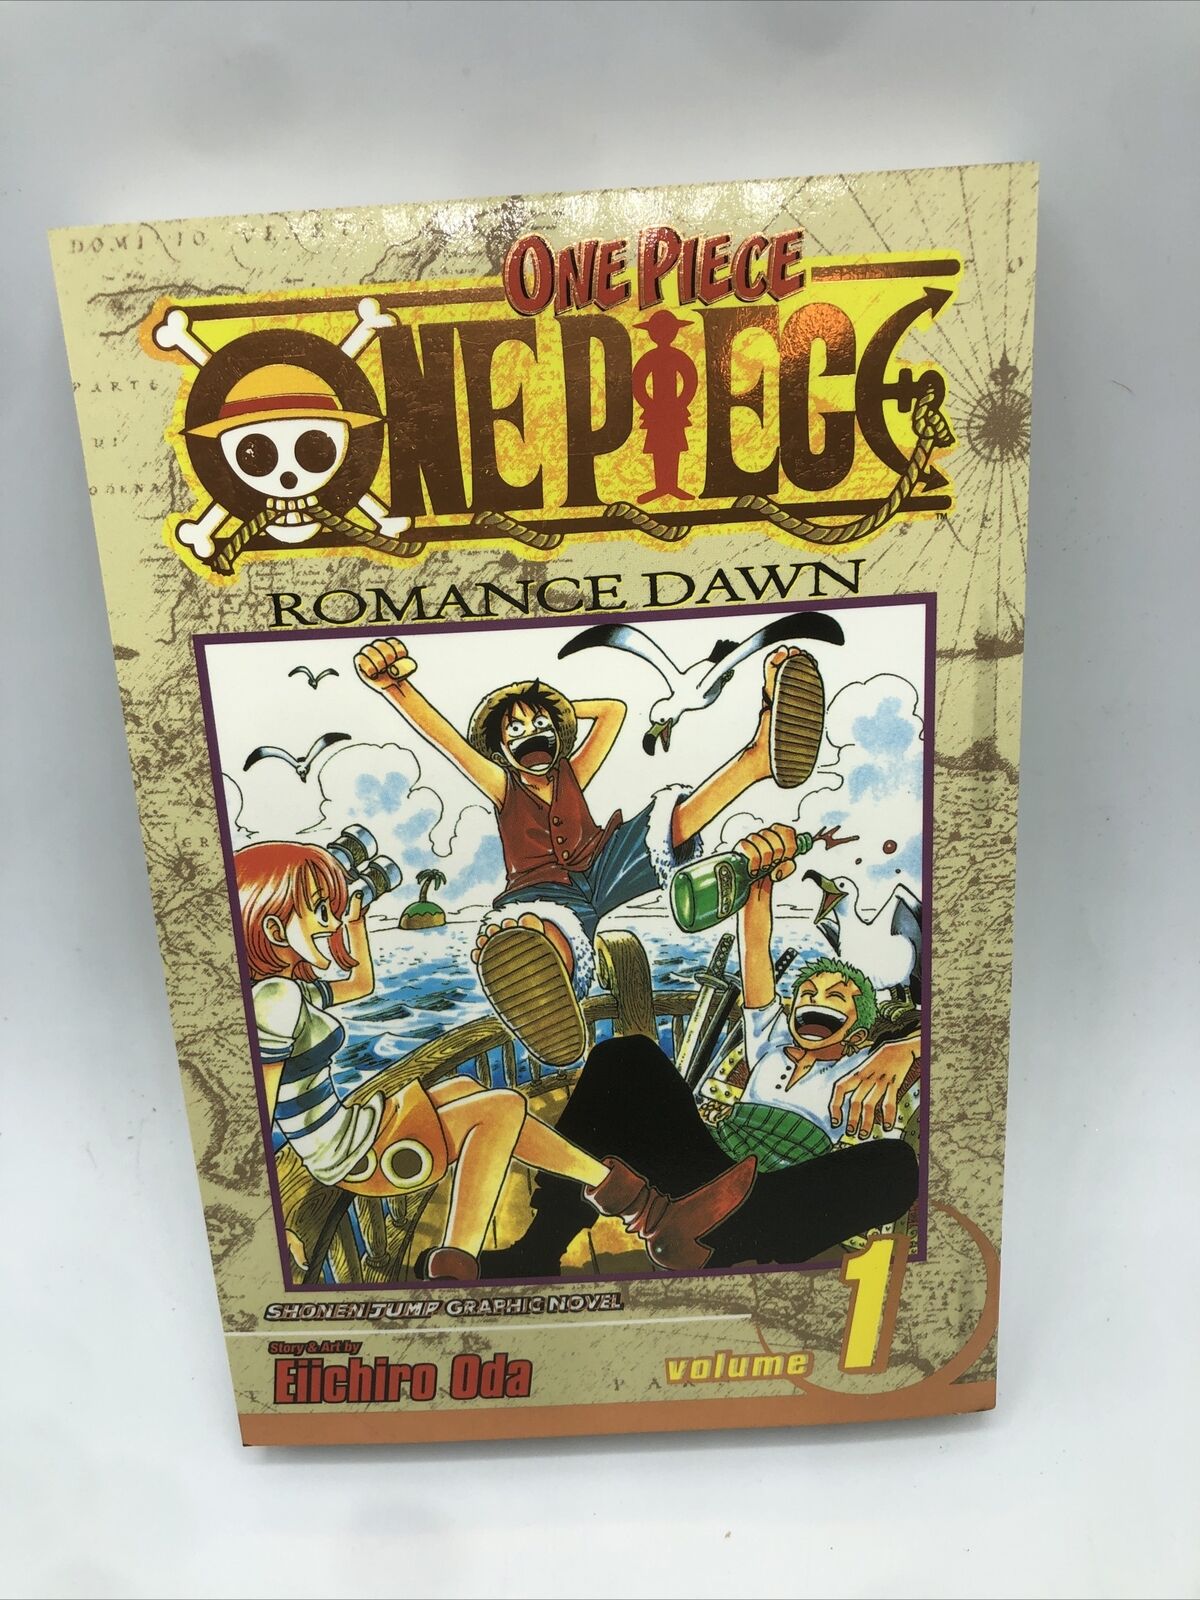 One Piece Manga Romance Dawn Shonen Jump Graphic Novel By Eiichiro Oda Volume 1